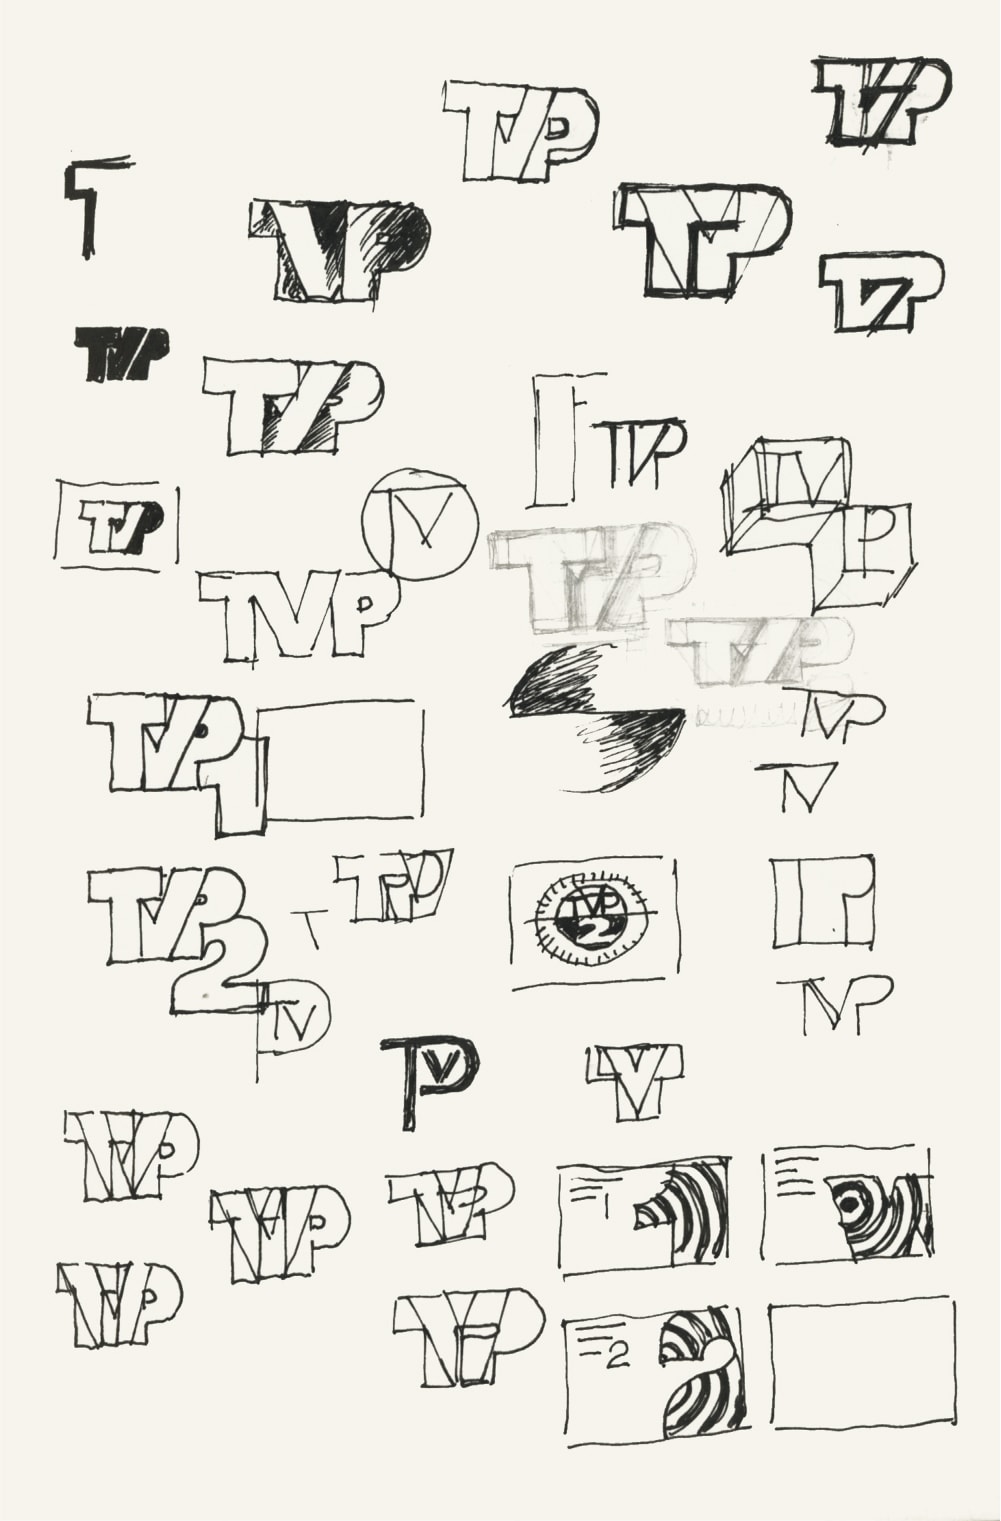 Szkice znaku TVP